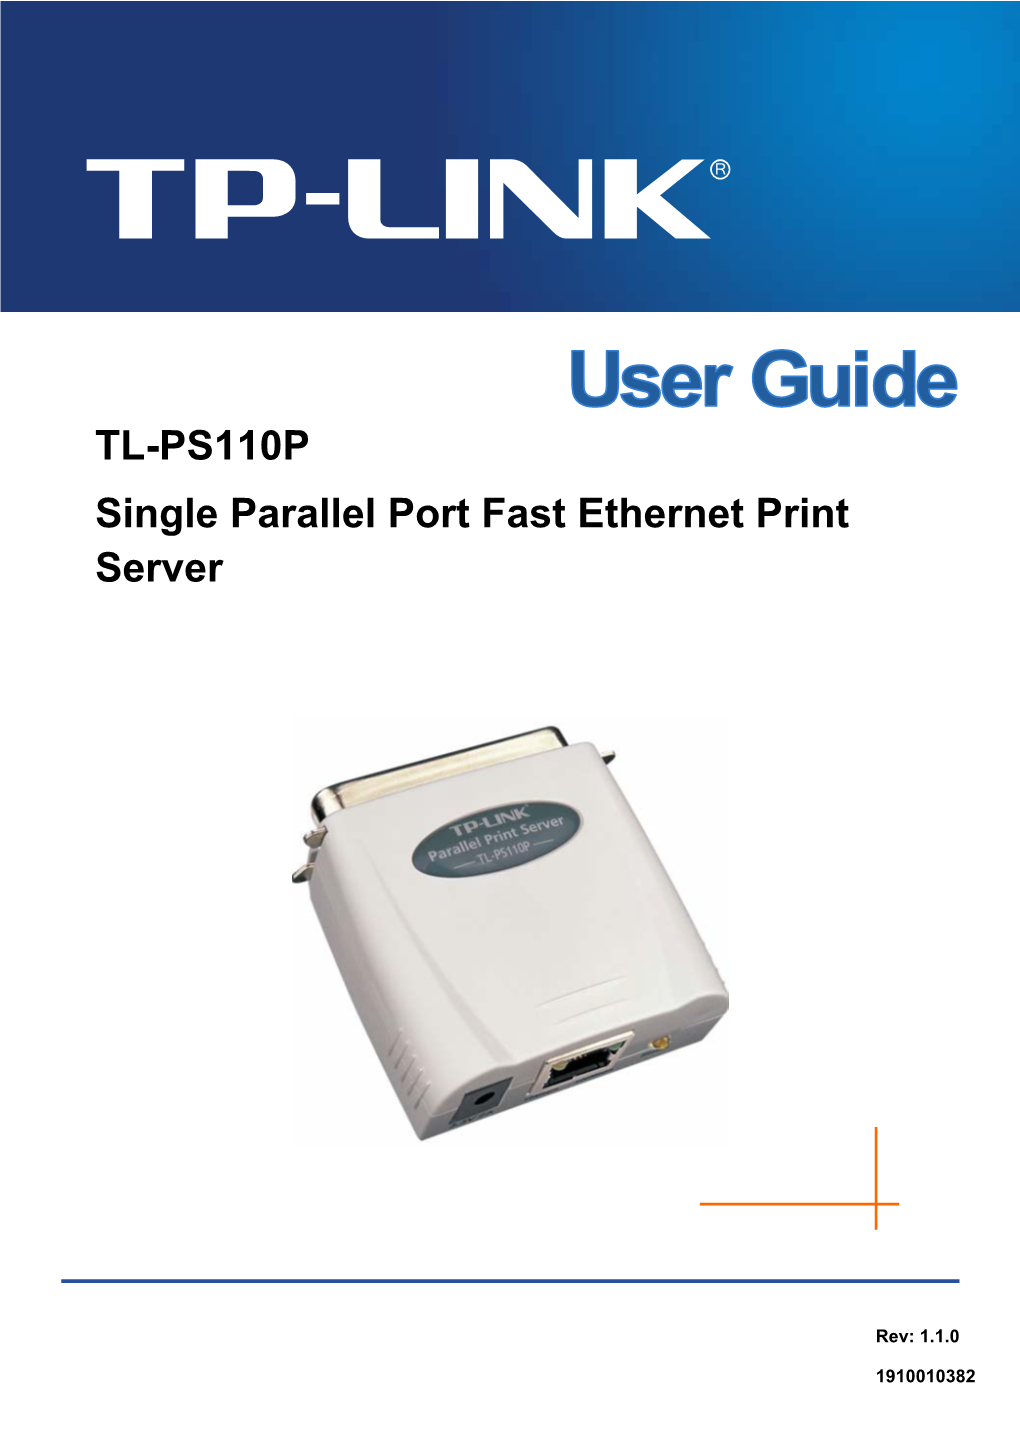 TL-PS110P Single Parallel Port Fast Ethernet Print Server